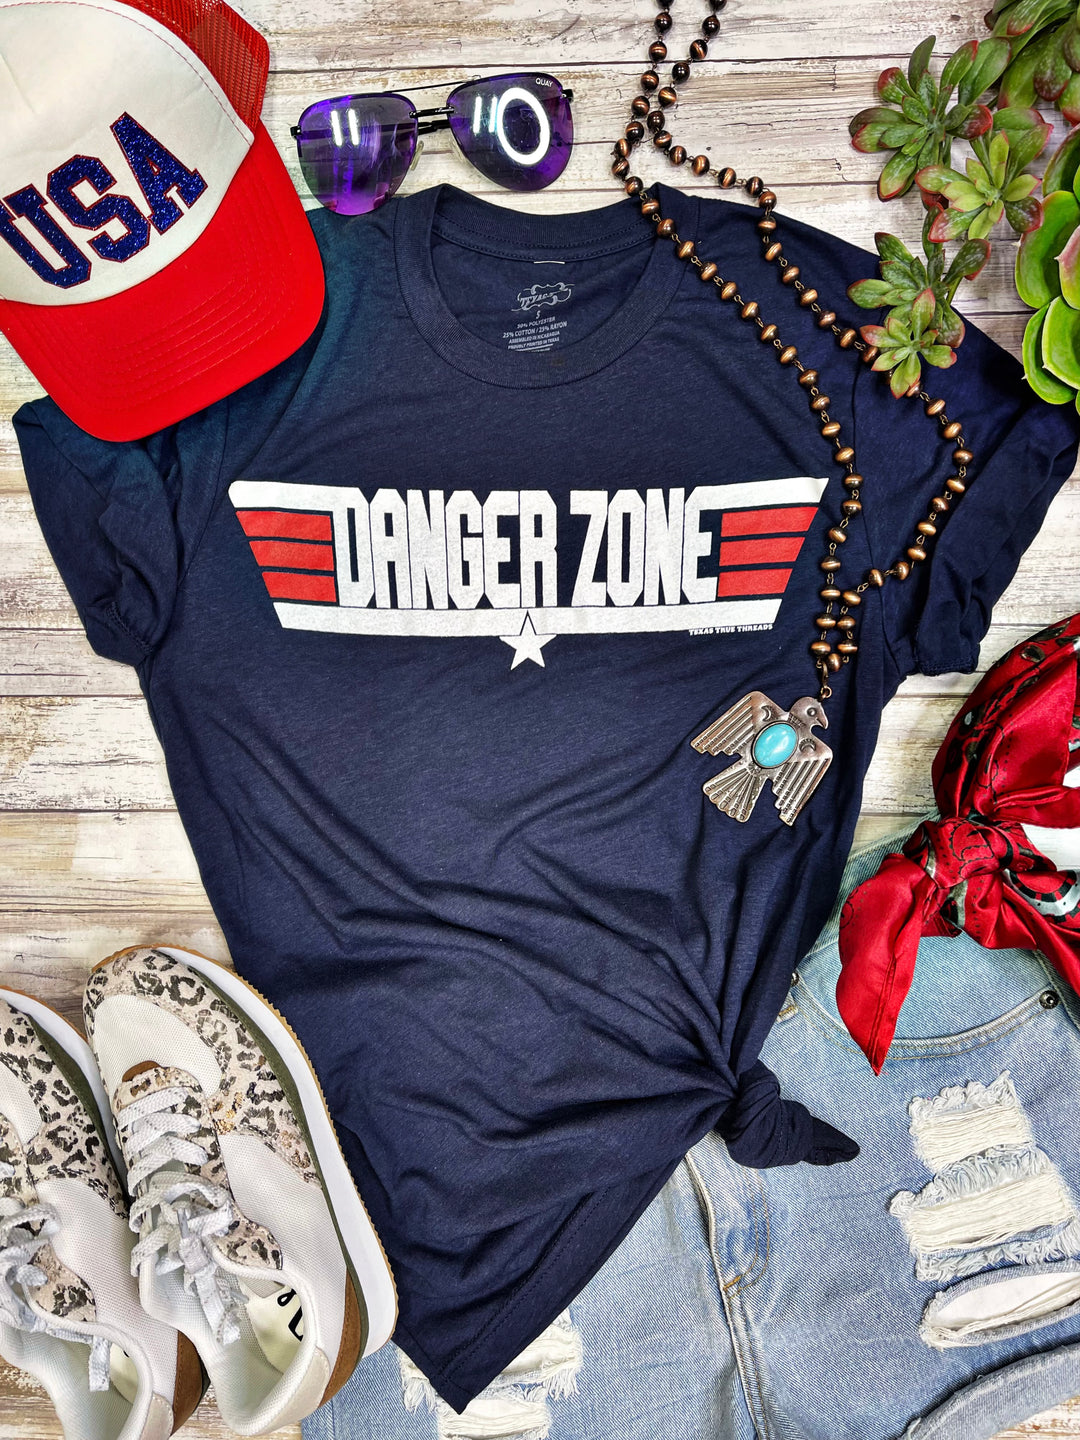 Danger Zone Navy Graphic Tee by Texas True Threads